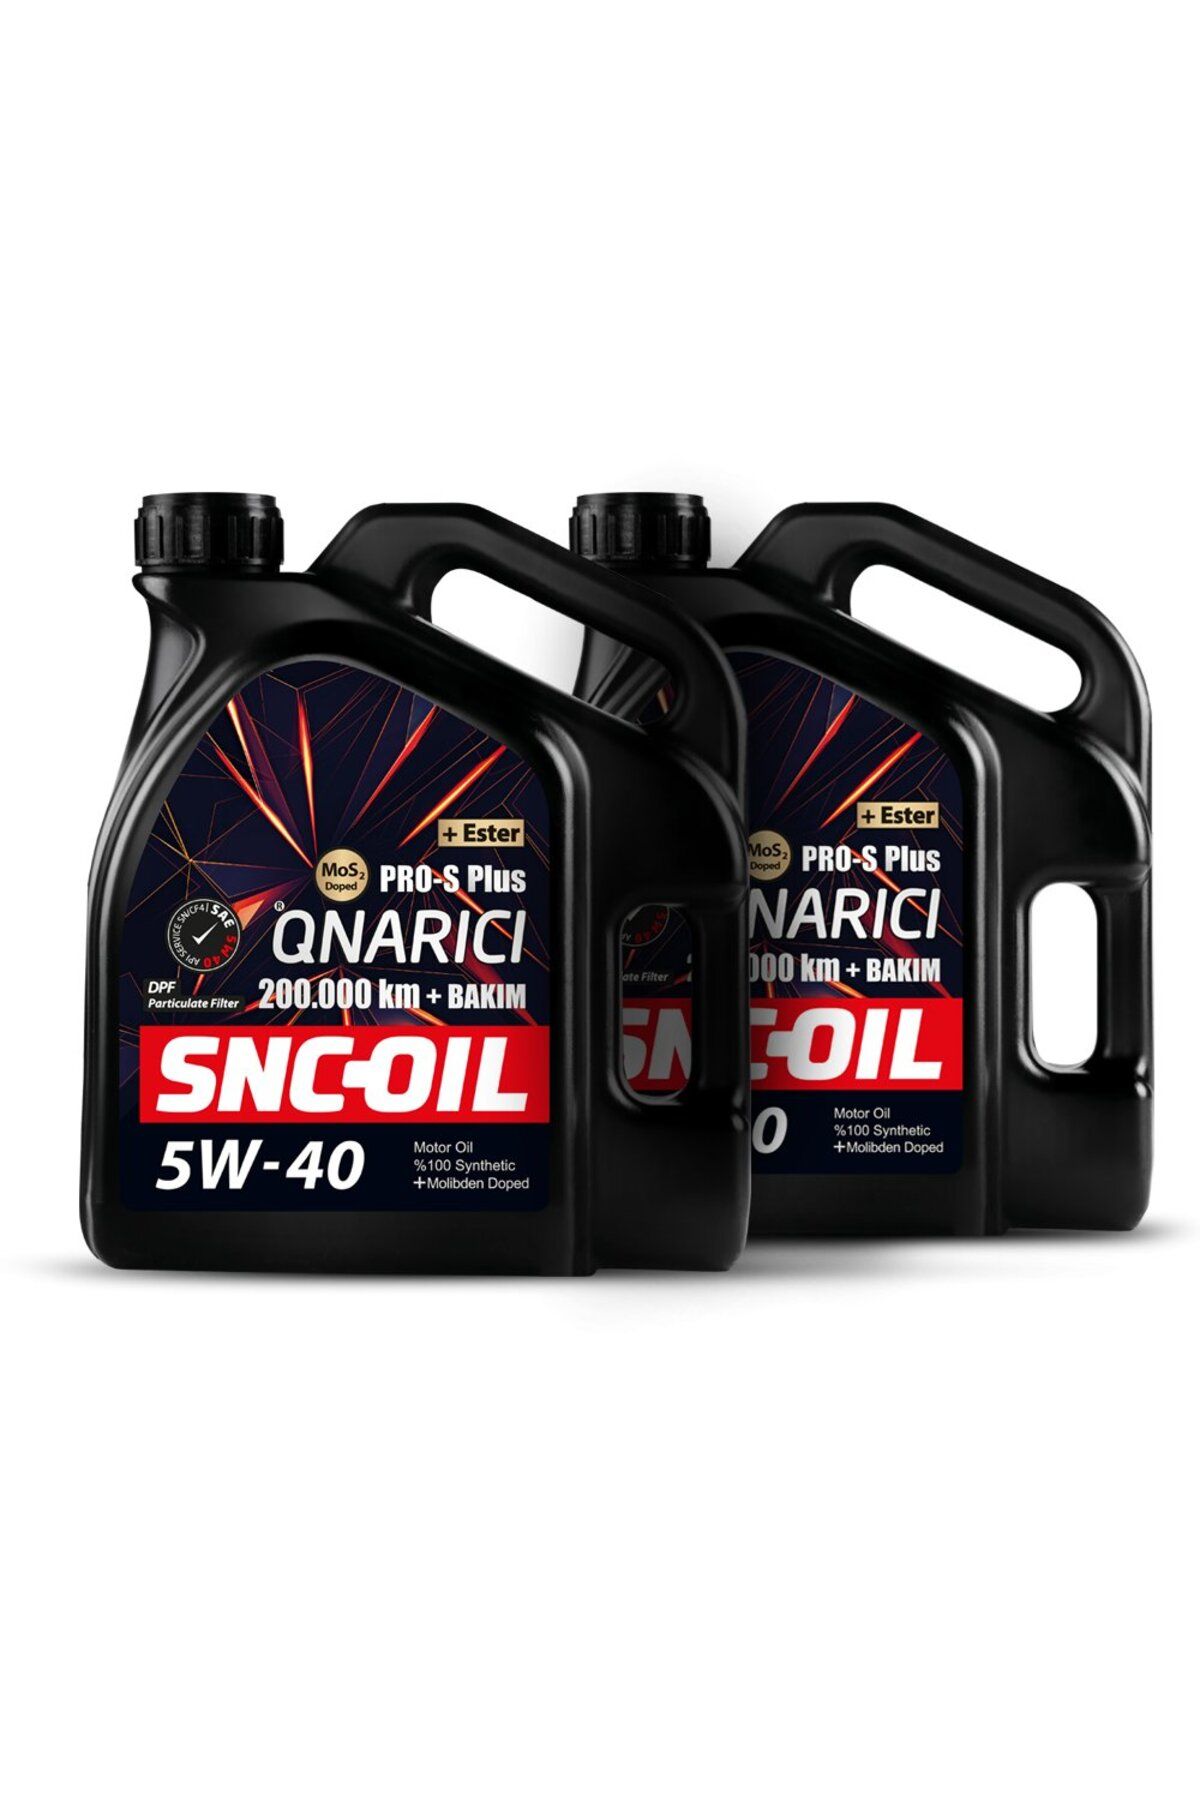 snc Icon Group - SNC-OIL 200.000 Km + Bakım Pro-S Plus Onarıcı 5W-40 Motor Yağı (8 Litre)